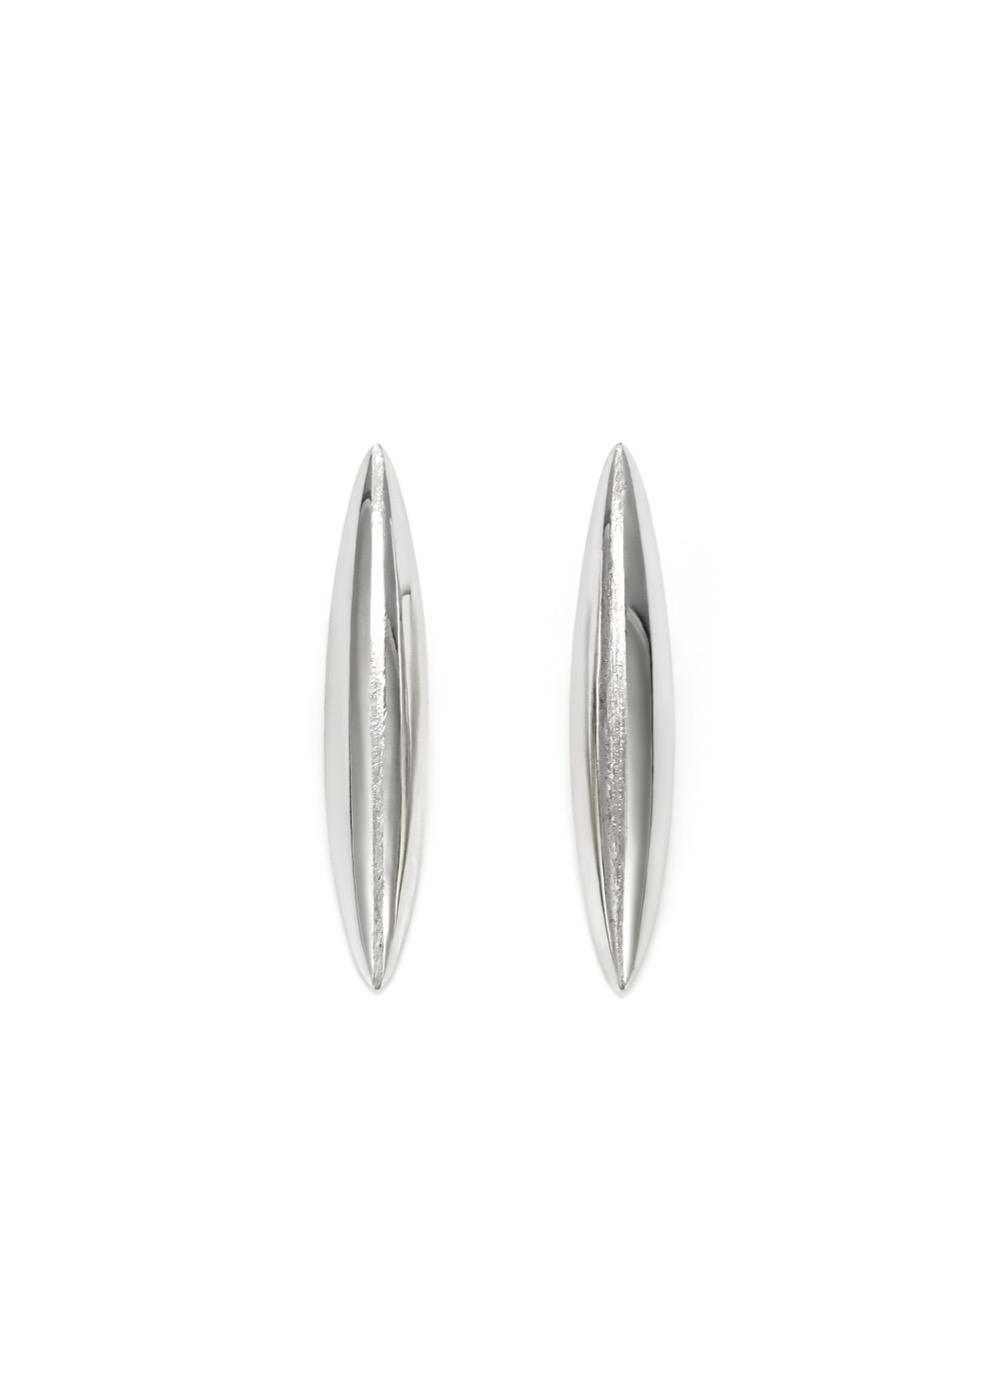 SADHER_phase1 earrings